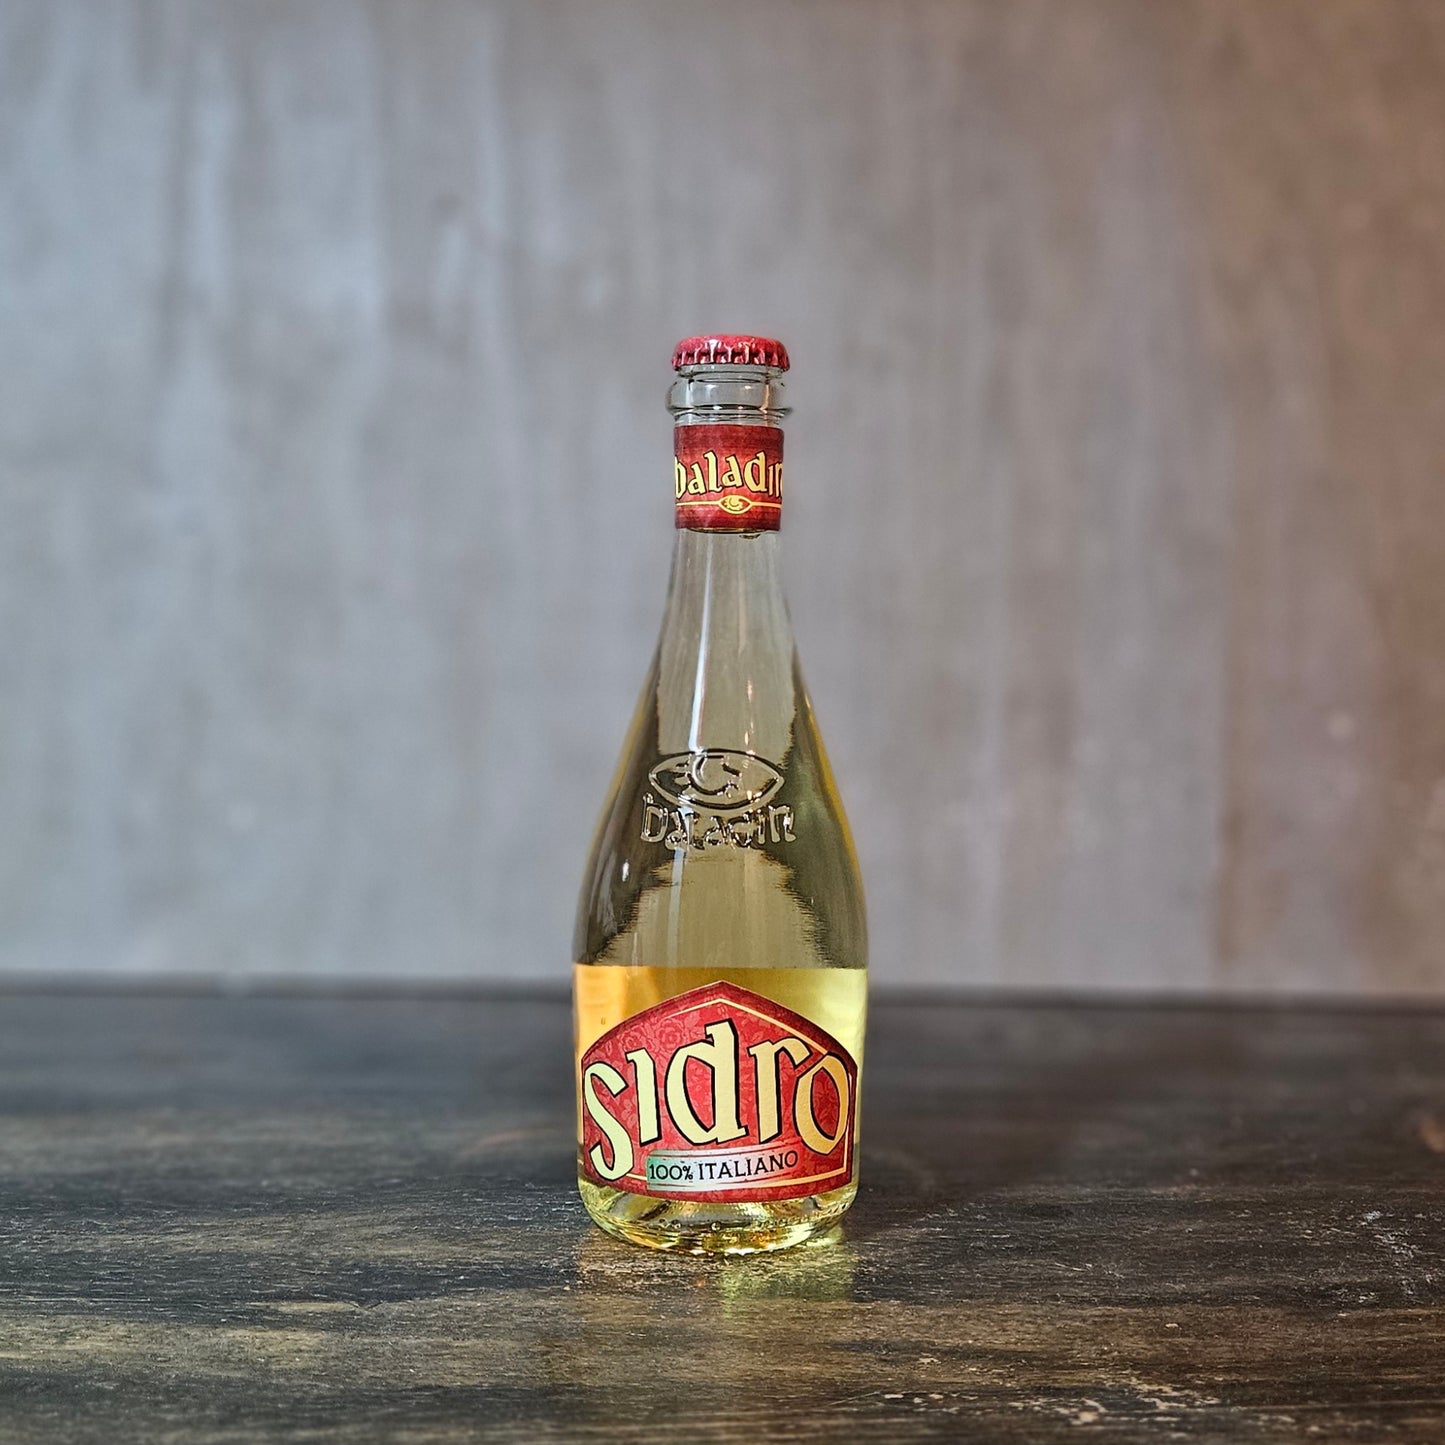 Birra Baladin "Sidro" Italian Cider